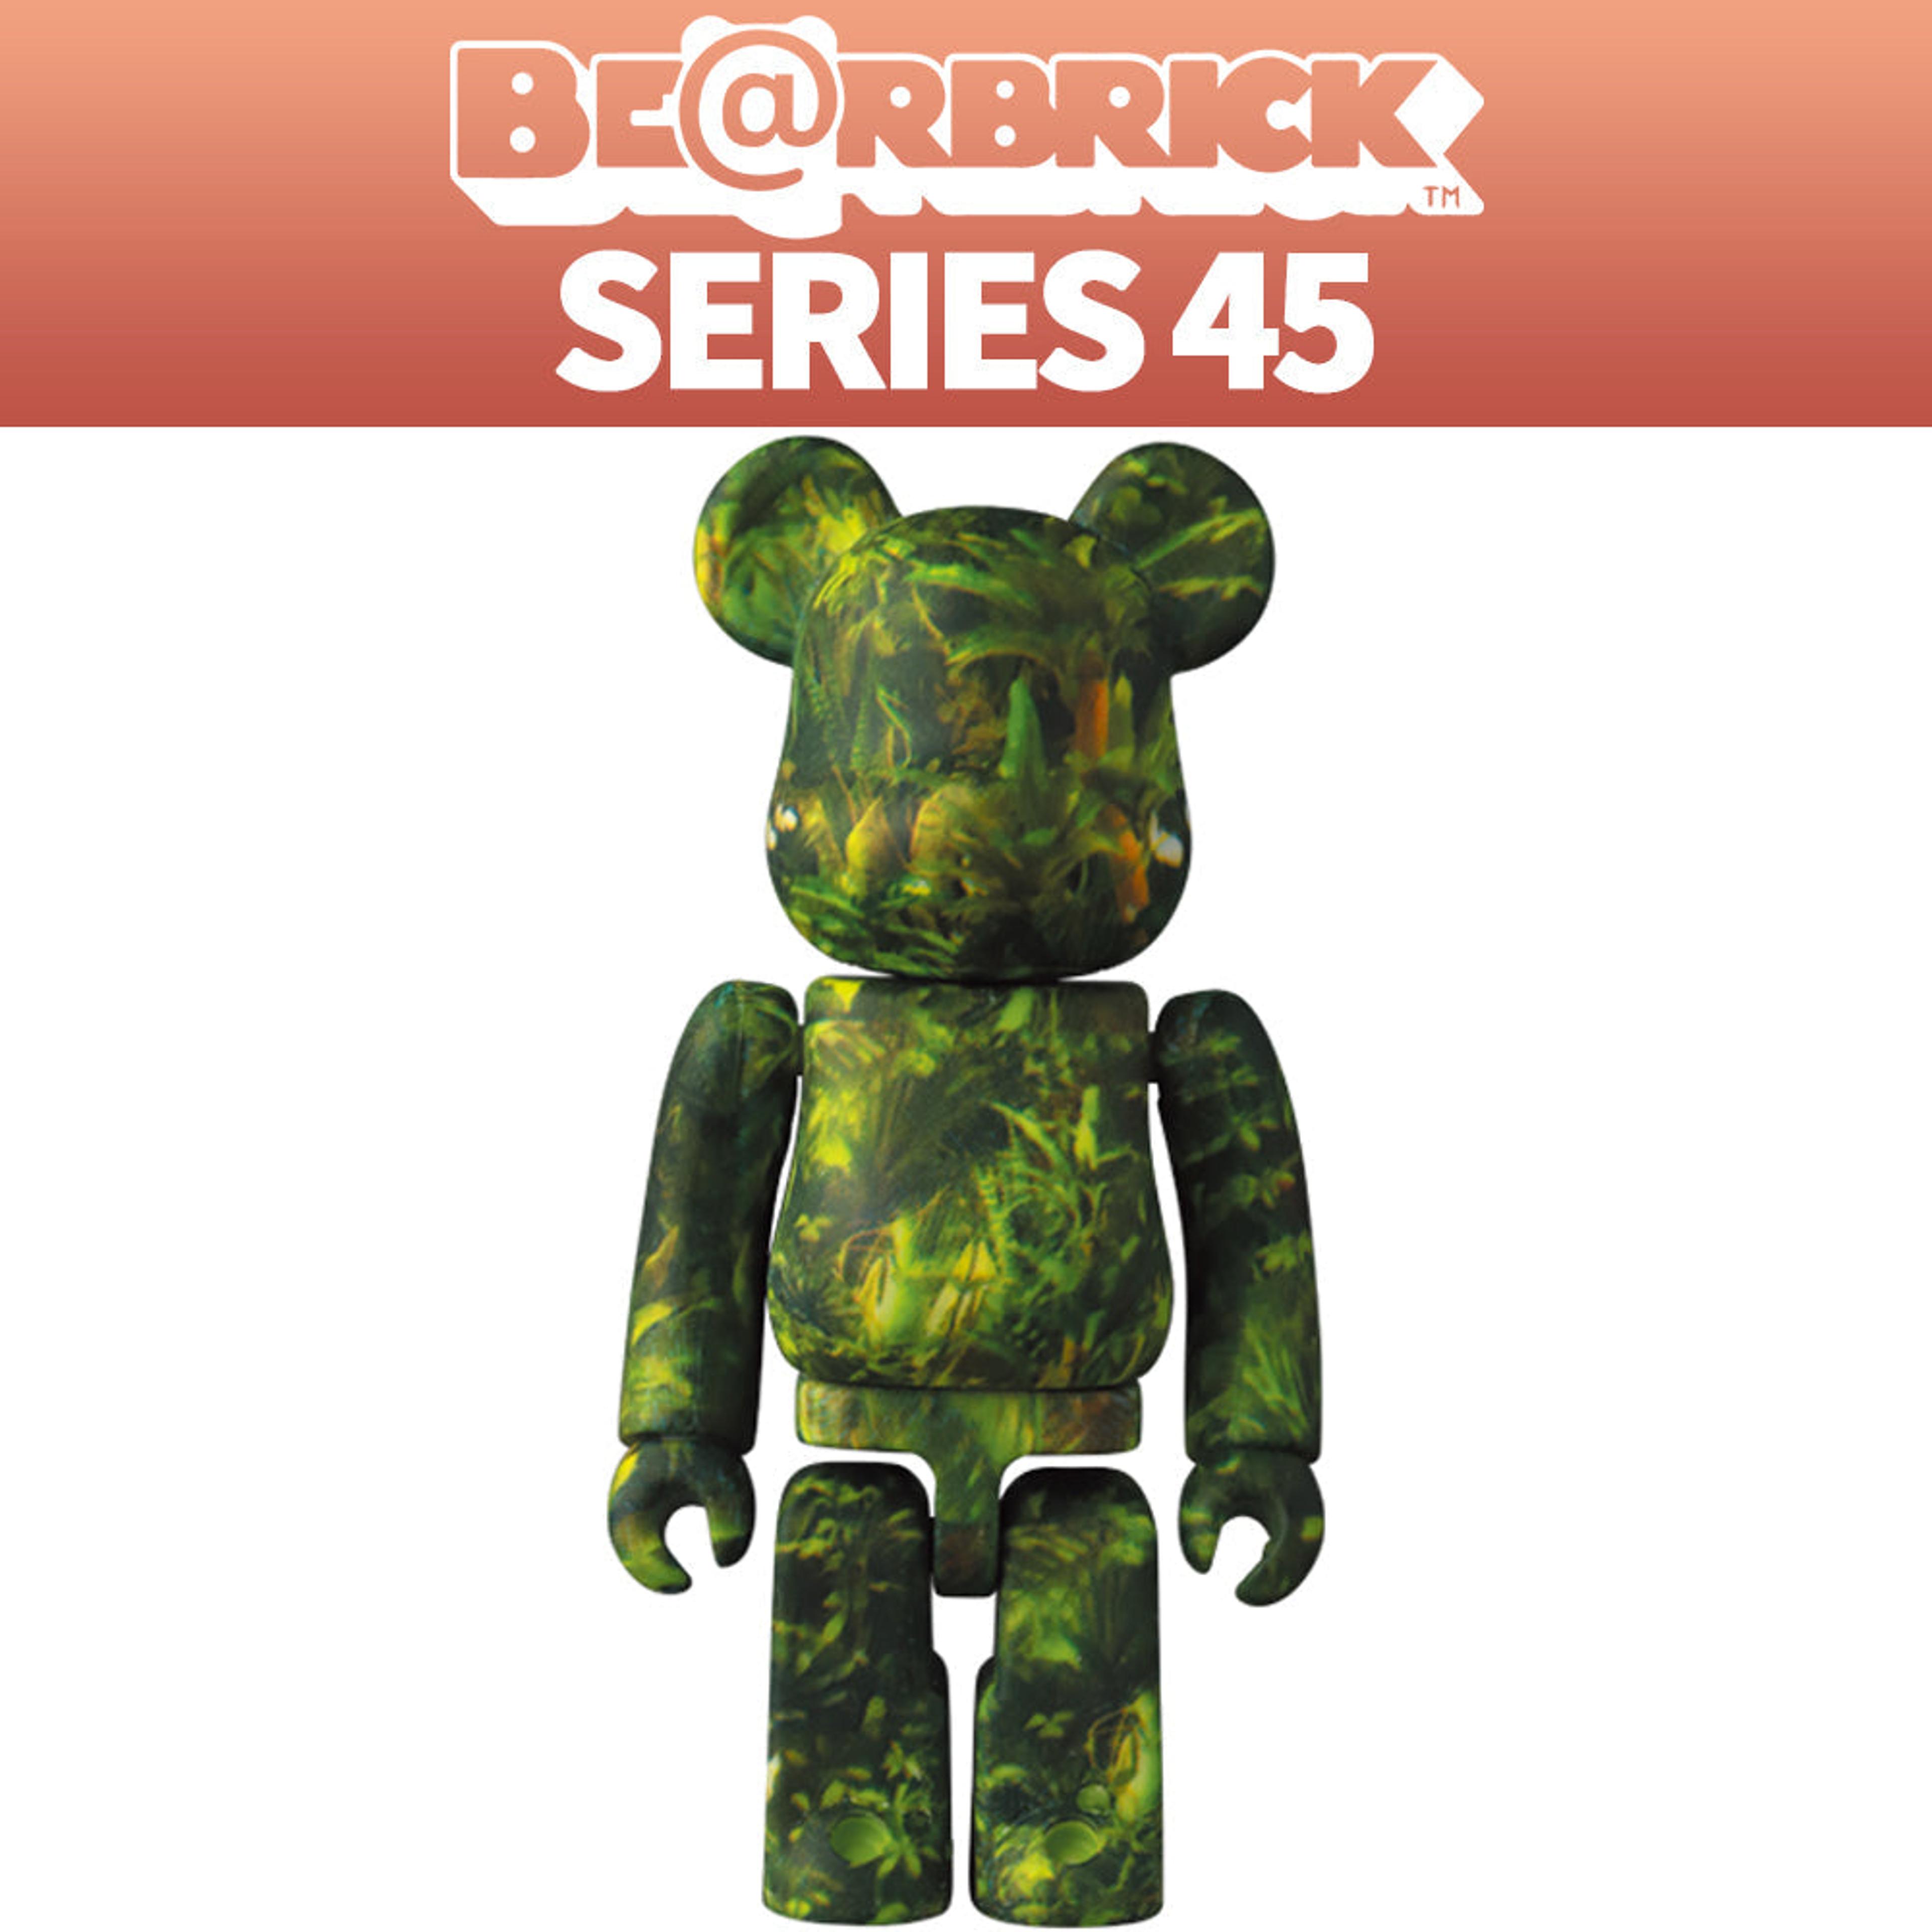 Alternate View 3 of Bearbrick Series 45 Blind Box by Medicom Toy